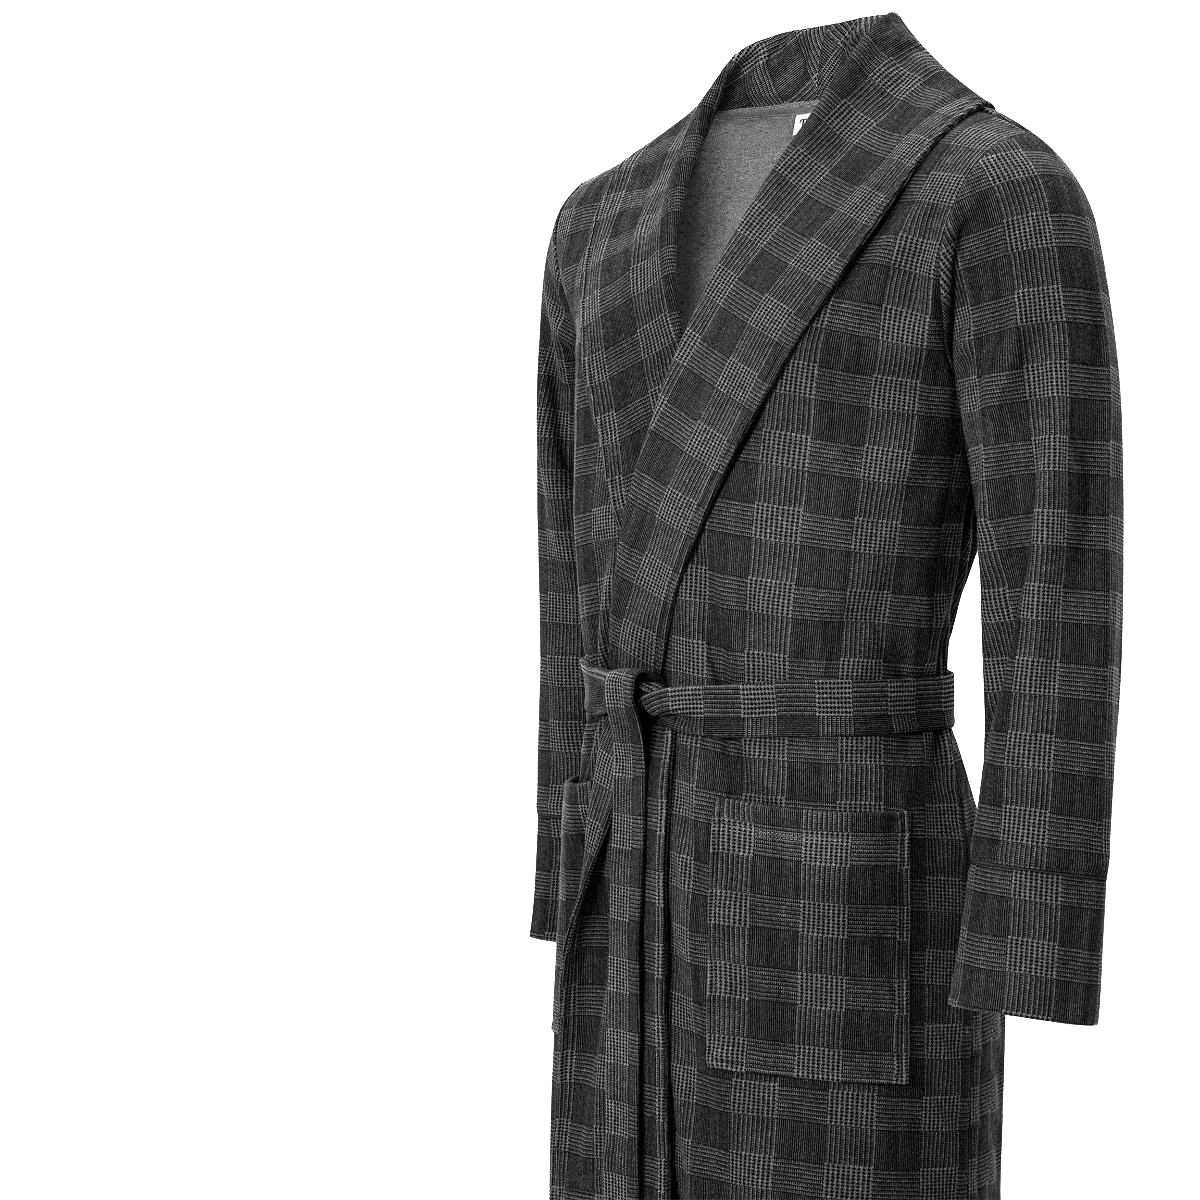 Домашний костюм Togas Рикон серый XL, цвет тёмно-серый, размер XL - фото 3